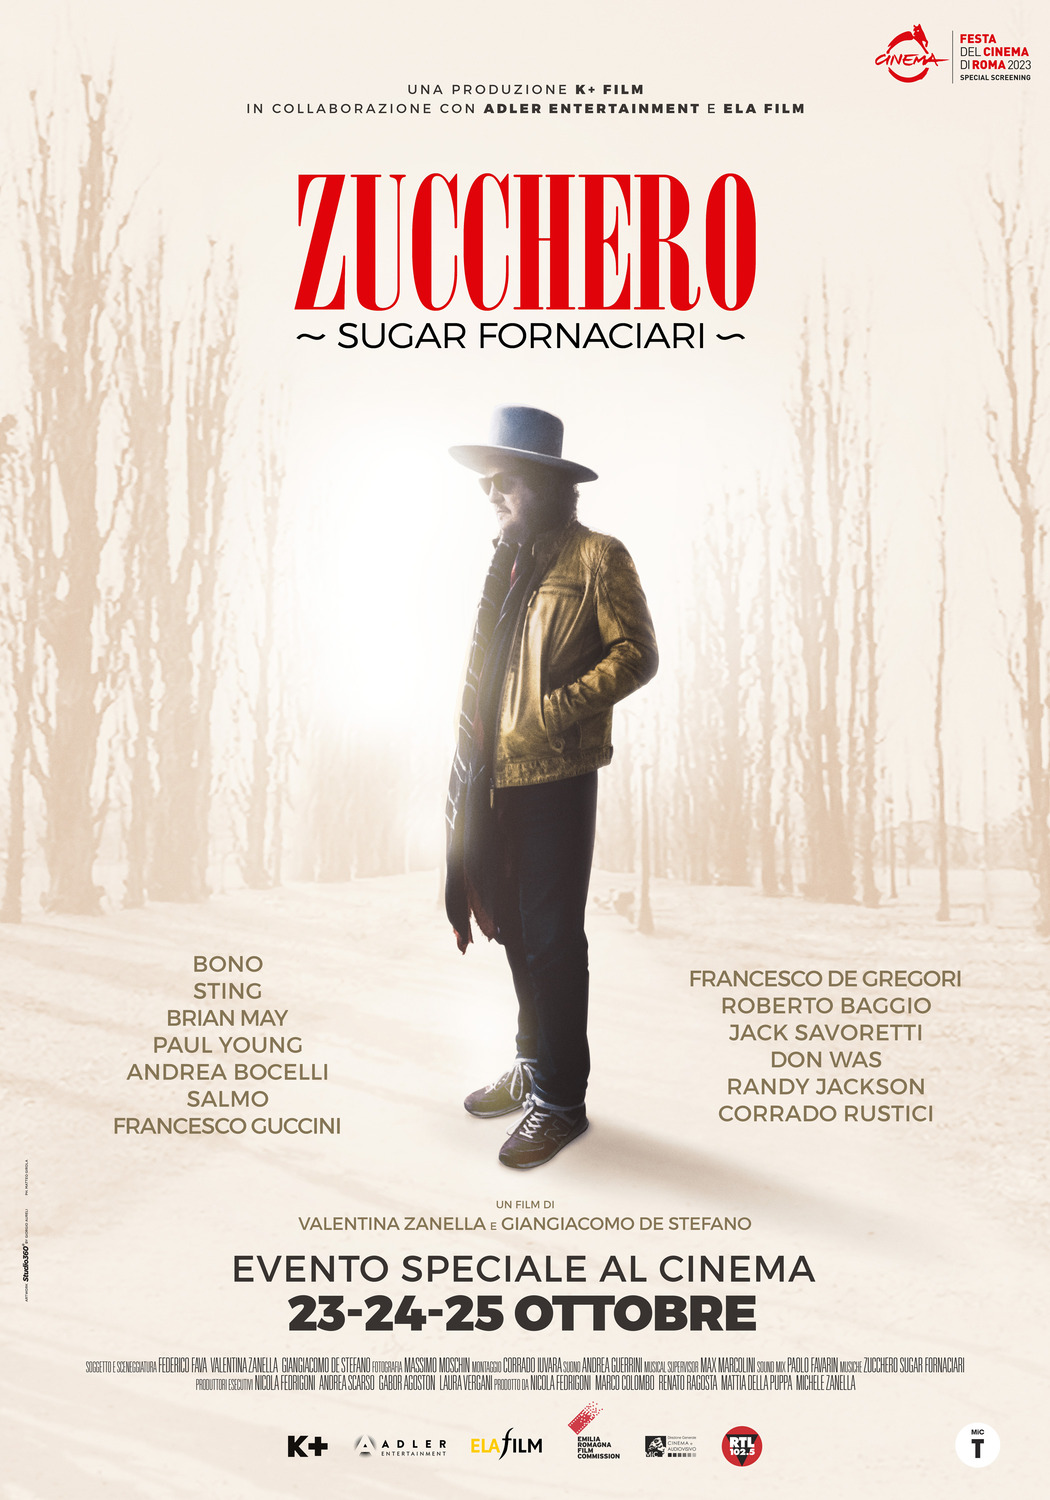 Extra Large Movie Poster Image for Zucchero Sugar Fornaciari 